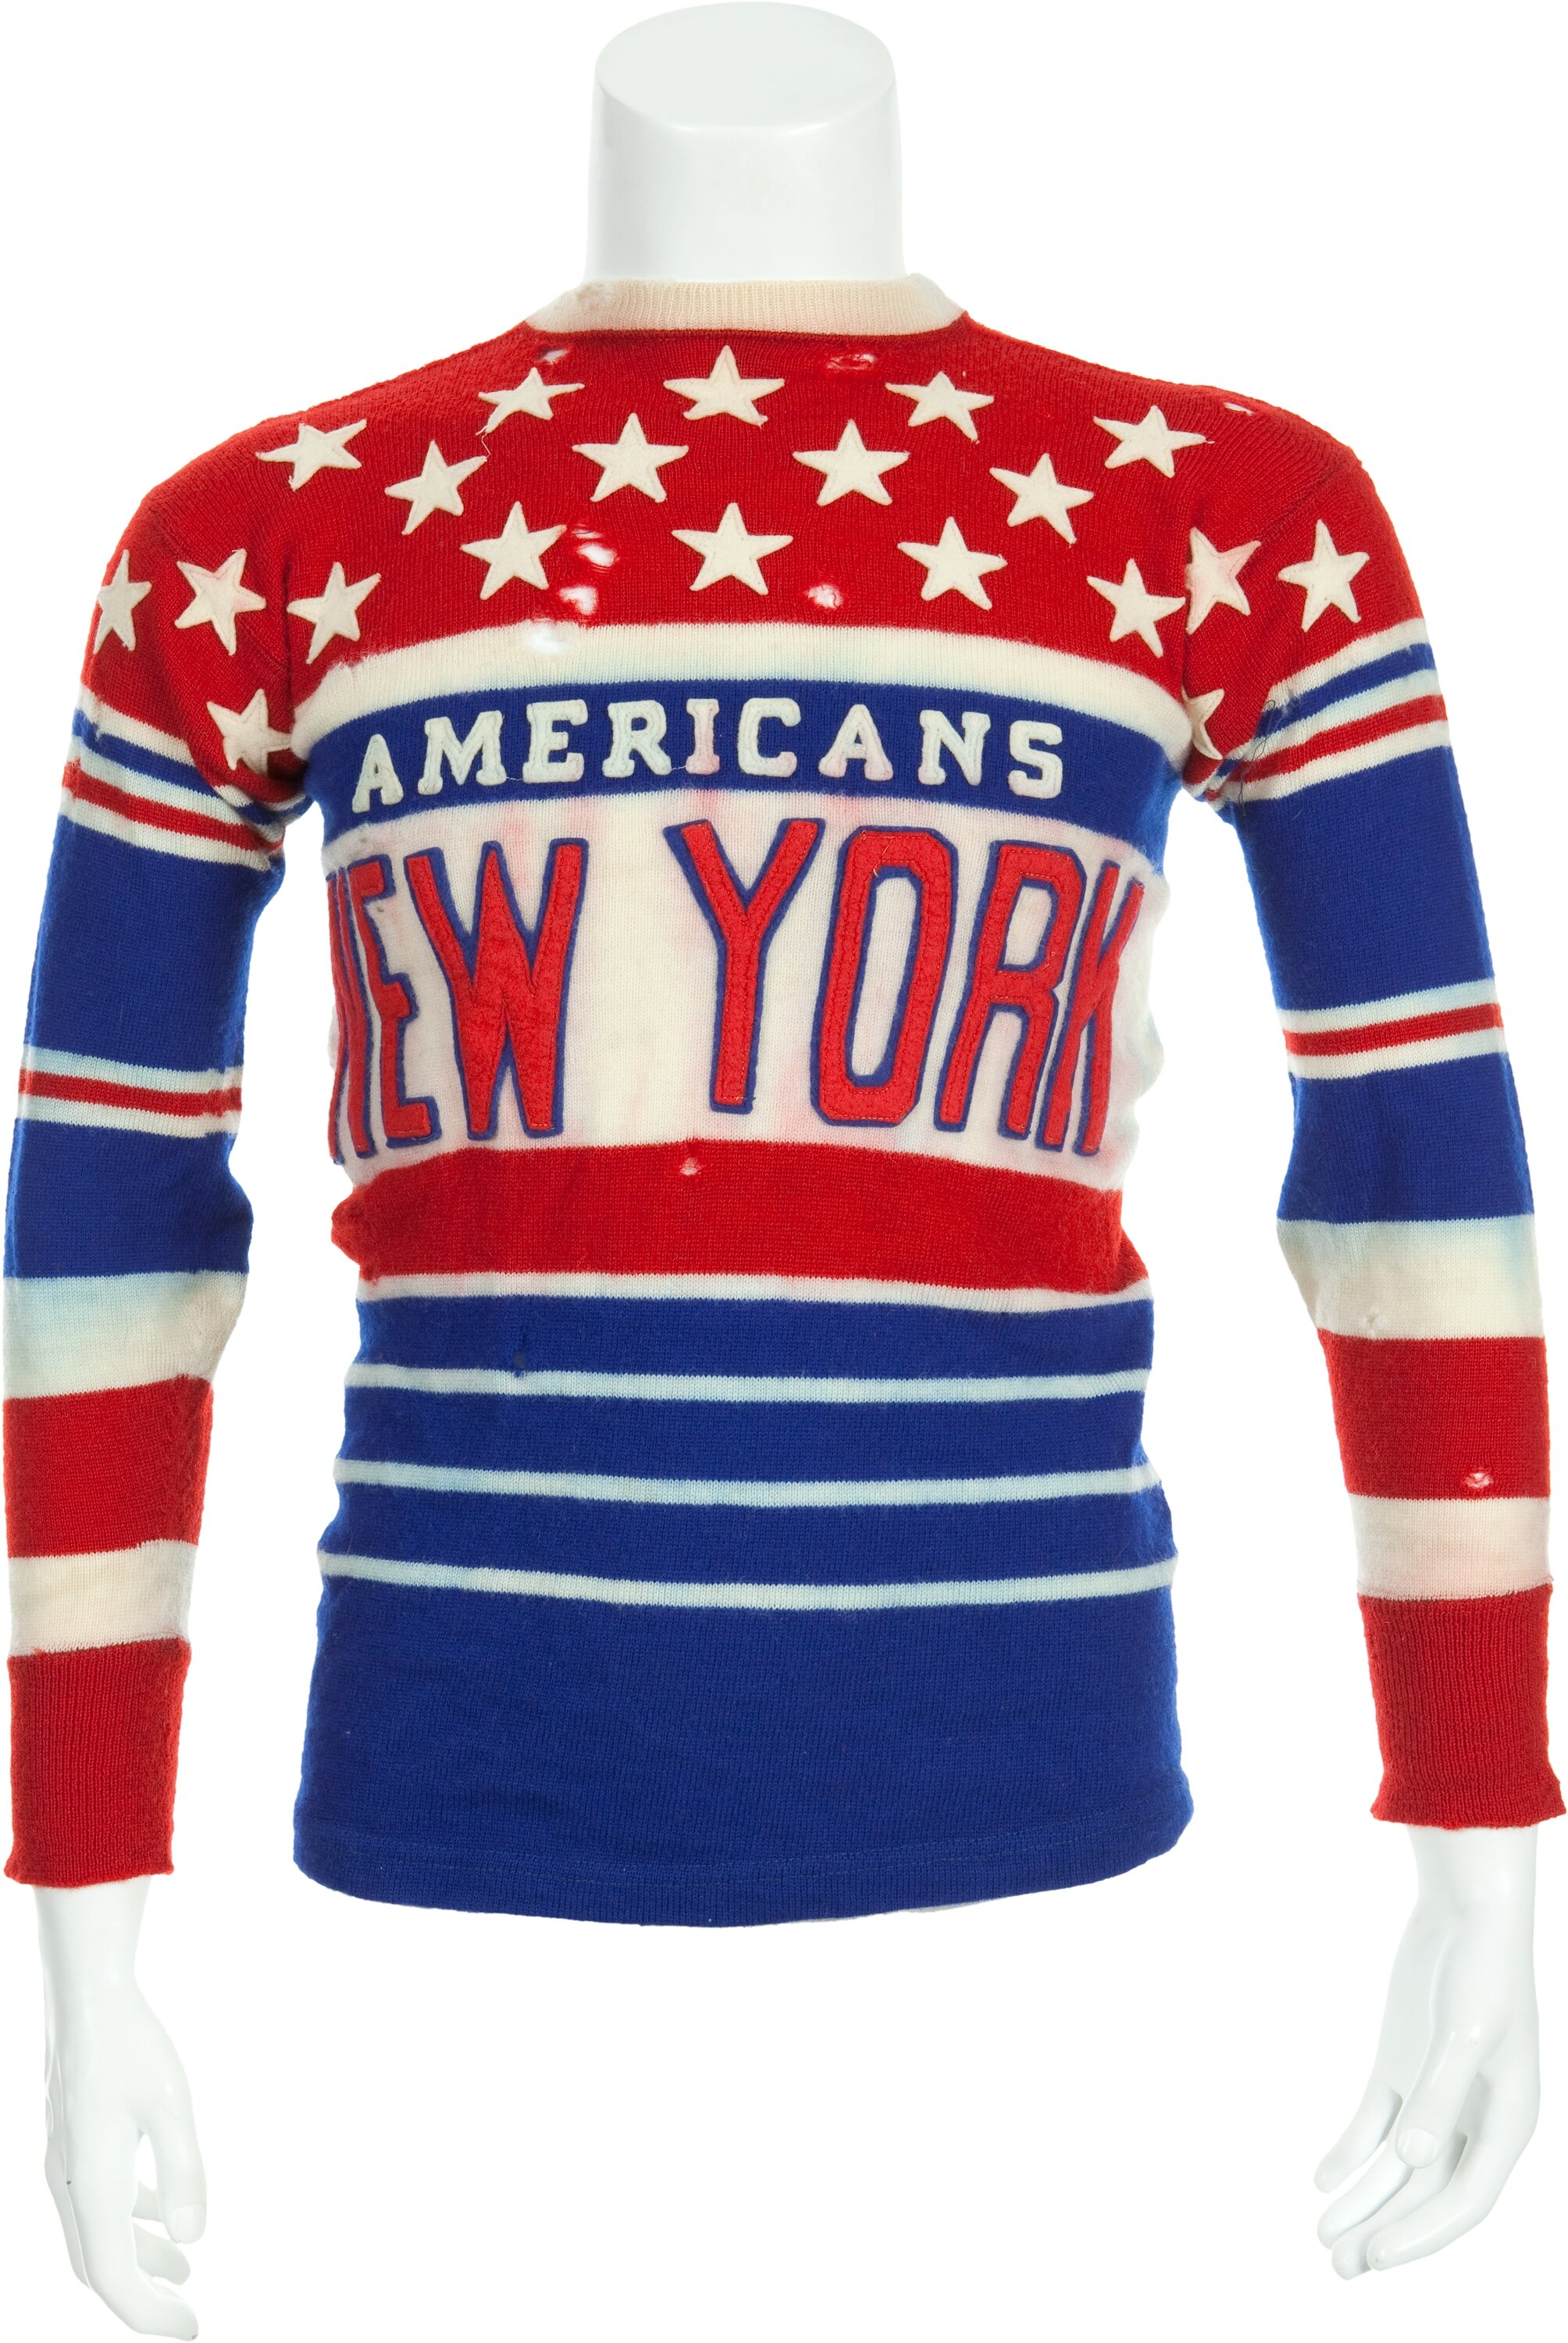 New York Americans Gear, Americans Jerseys, New York Americans Clothing,  Americans Pro Shop, Hockey Apparel